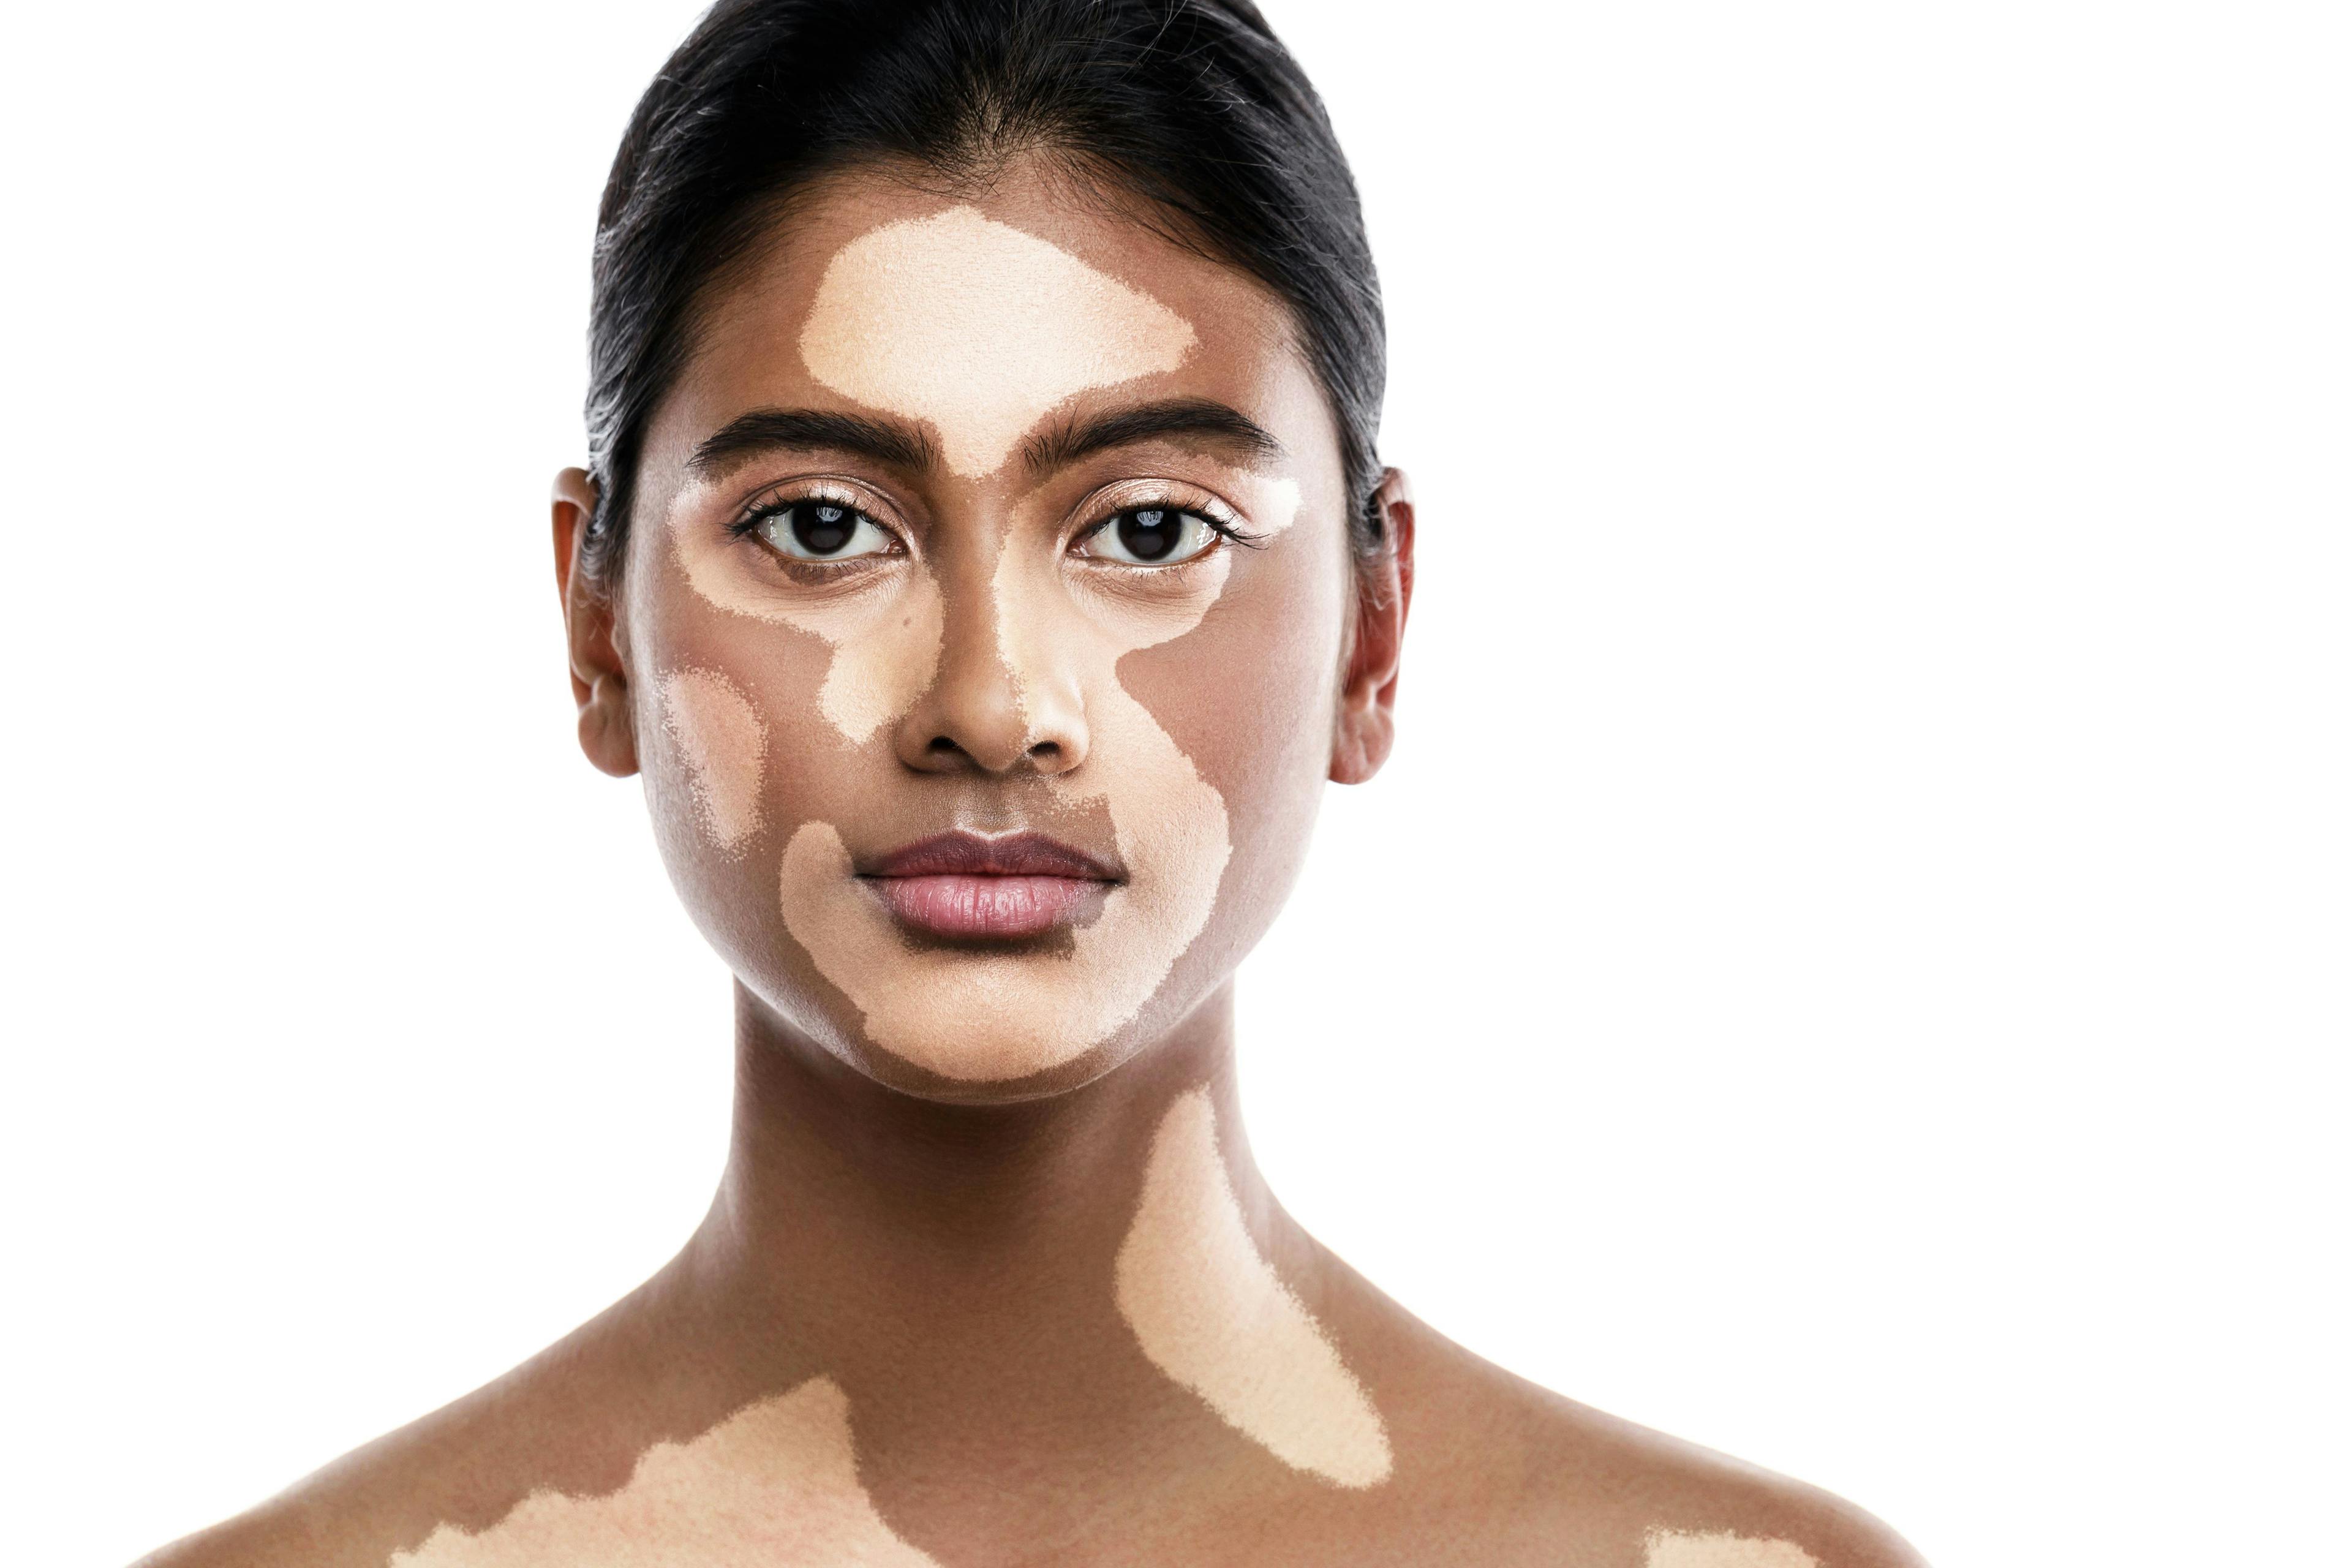 25.1% of Patients Cited “Less Noticeable” Vitiligo in Recent Study